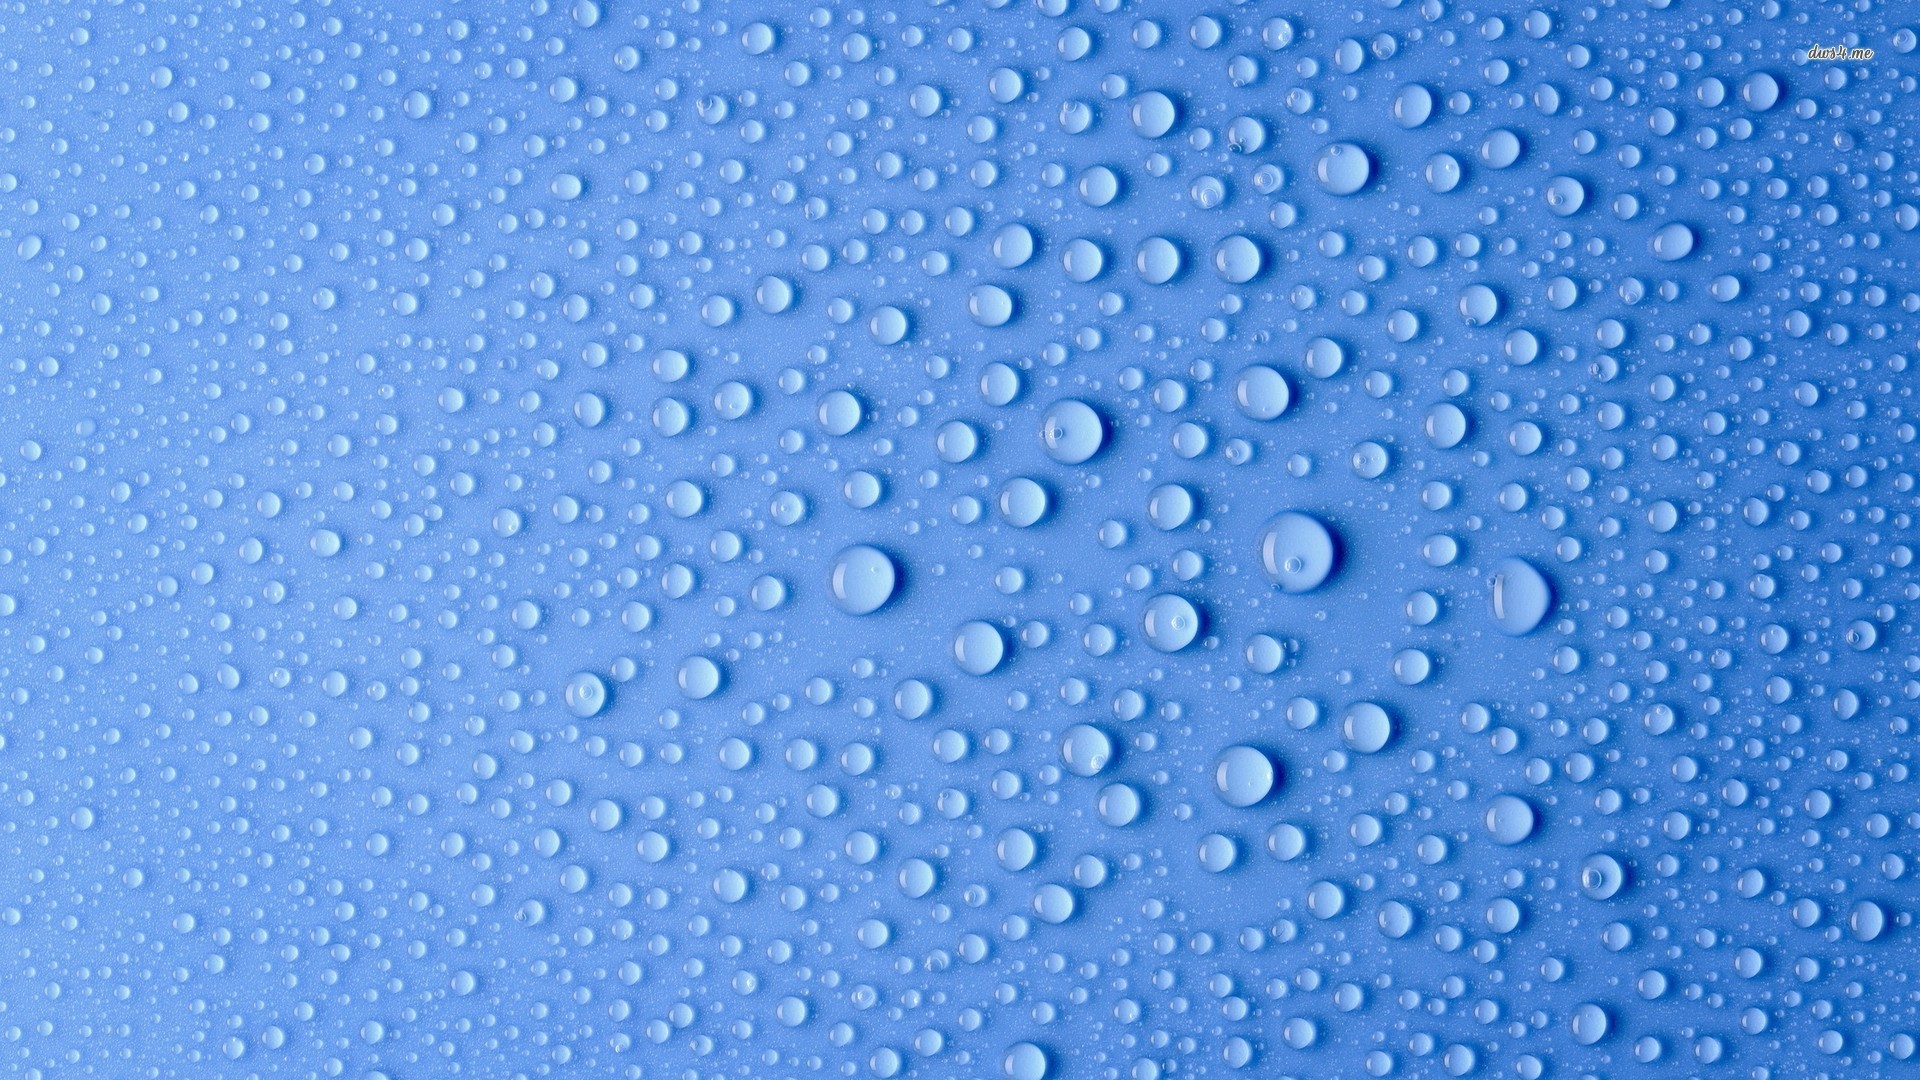 Hd Water Drops Wallpaper 79 Images